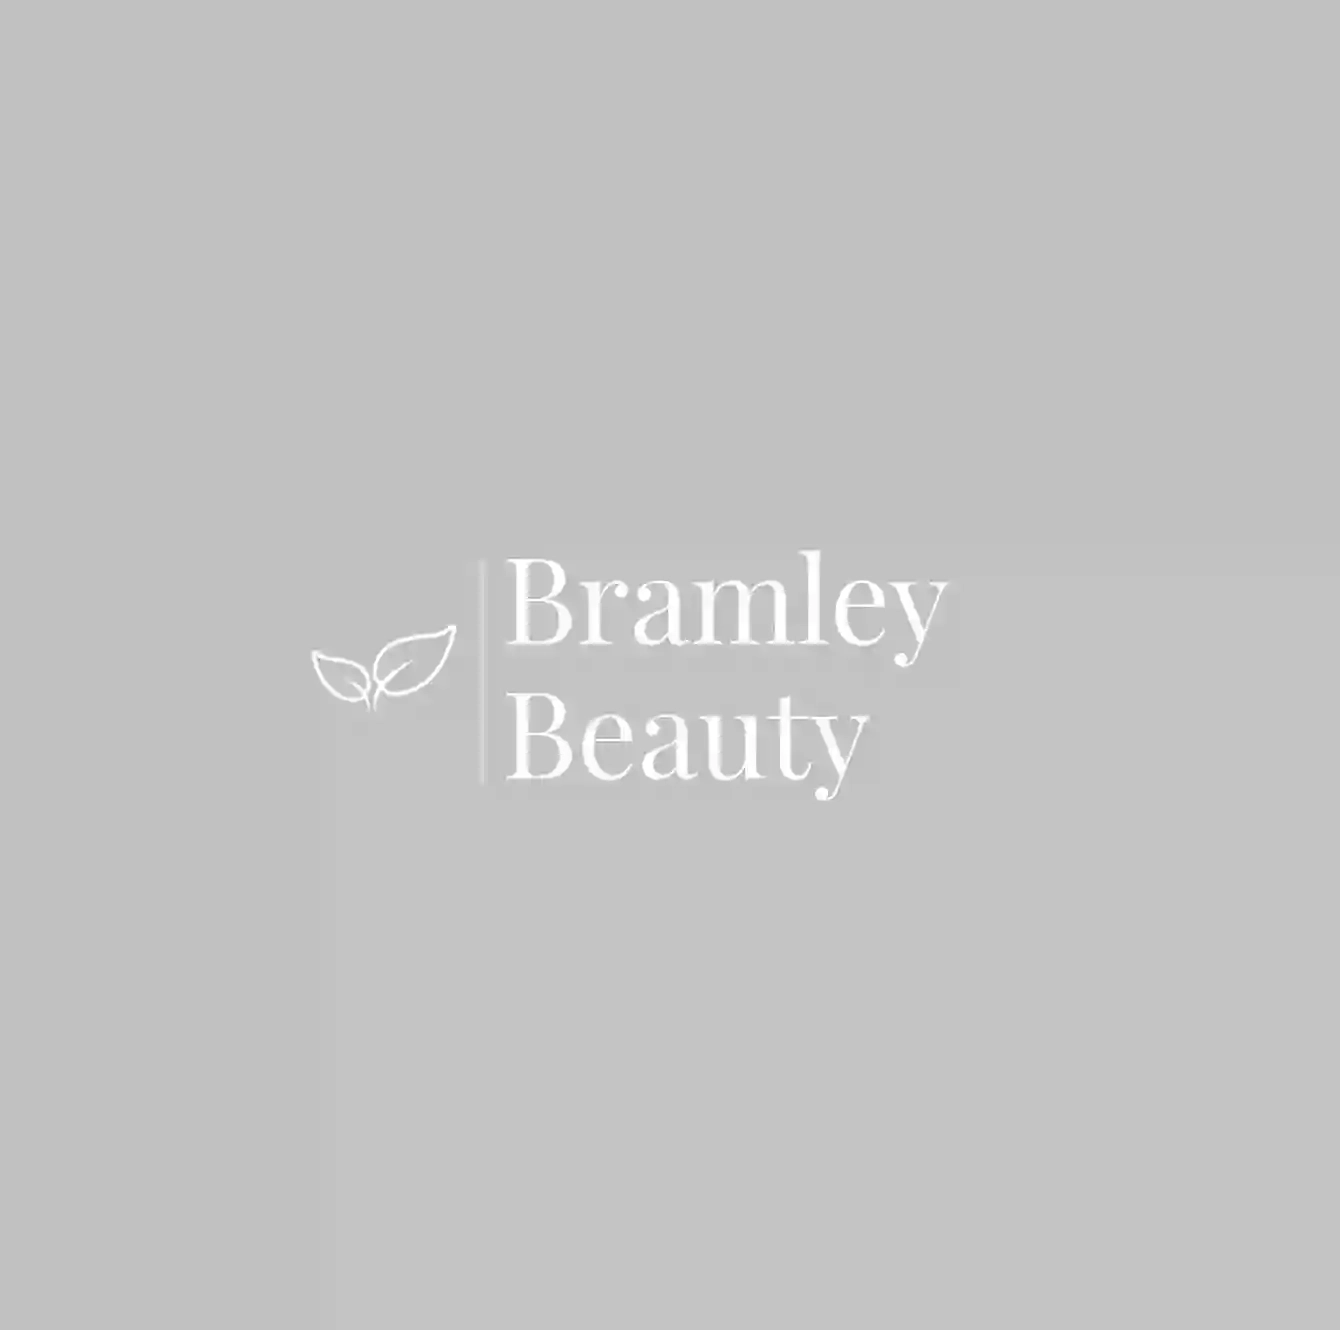 Bramley Beauty